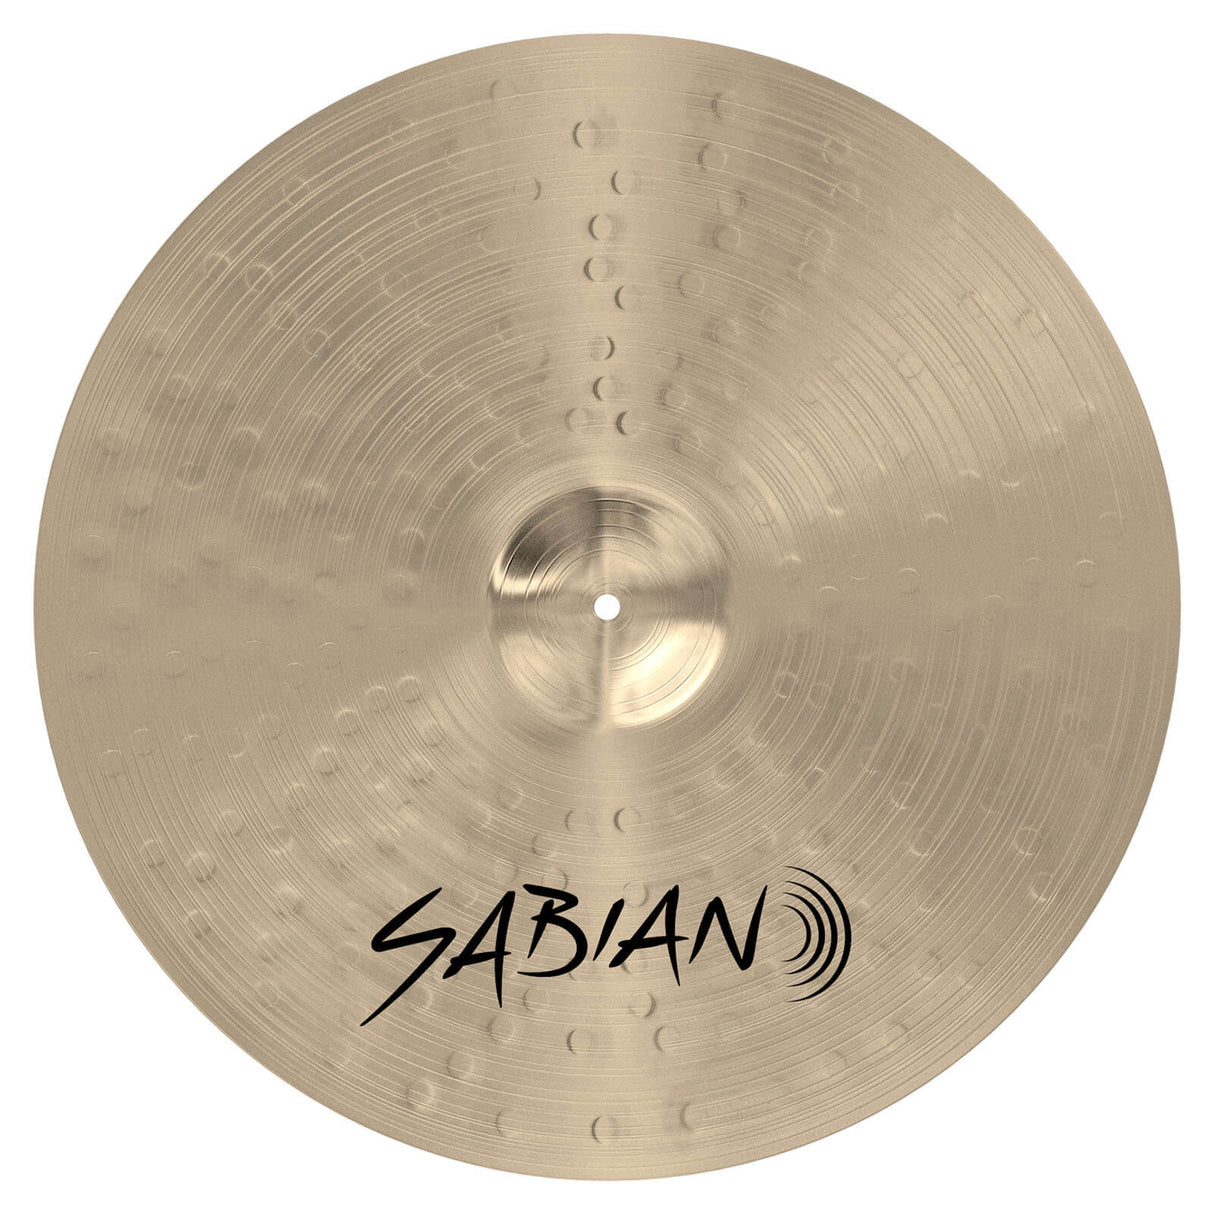 Sabian Stratus Crash Cymbal 20"